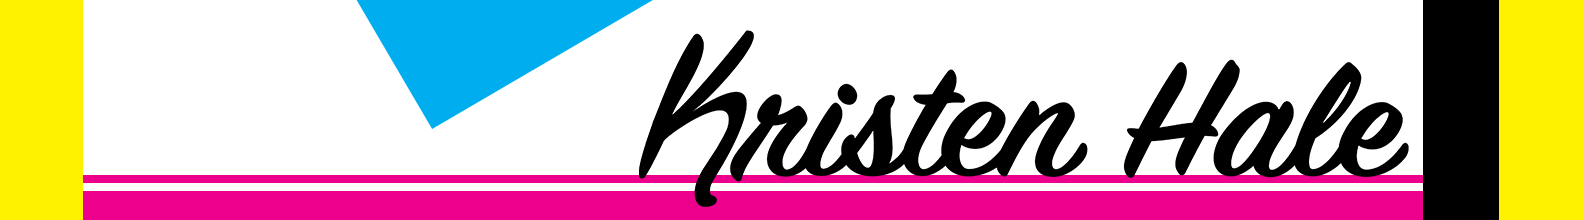 Kristen Hale's profile banner